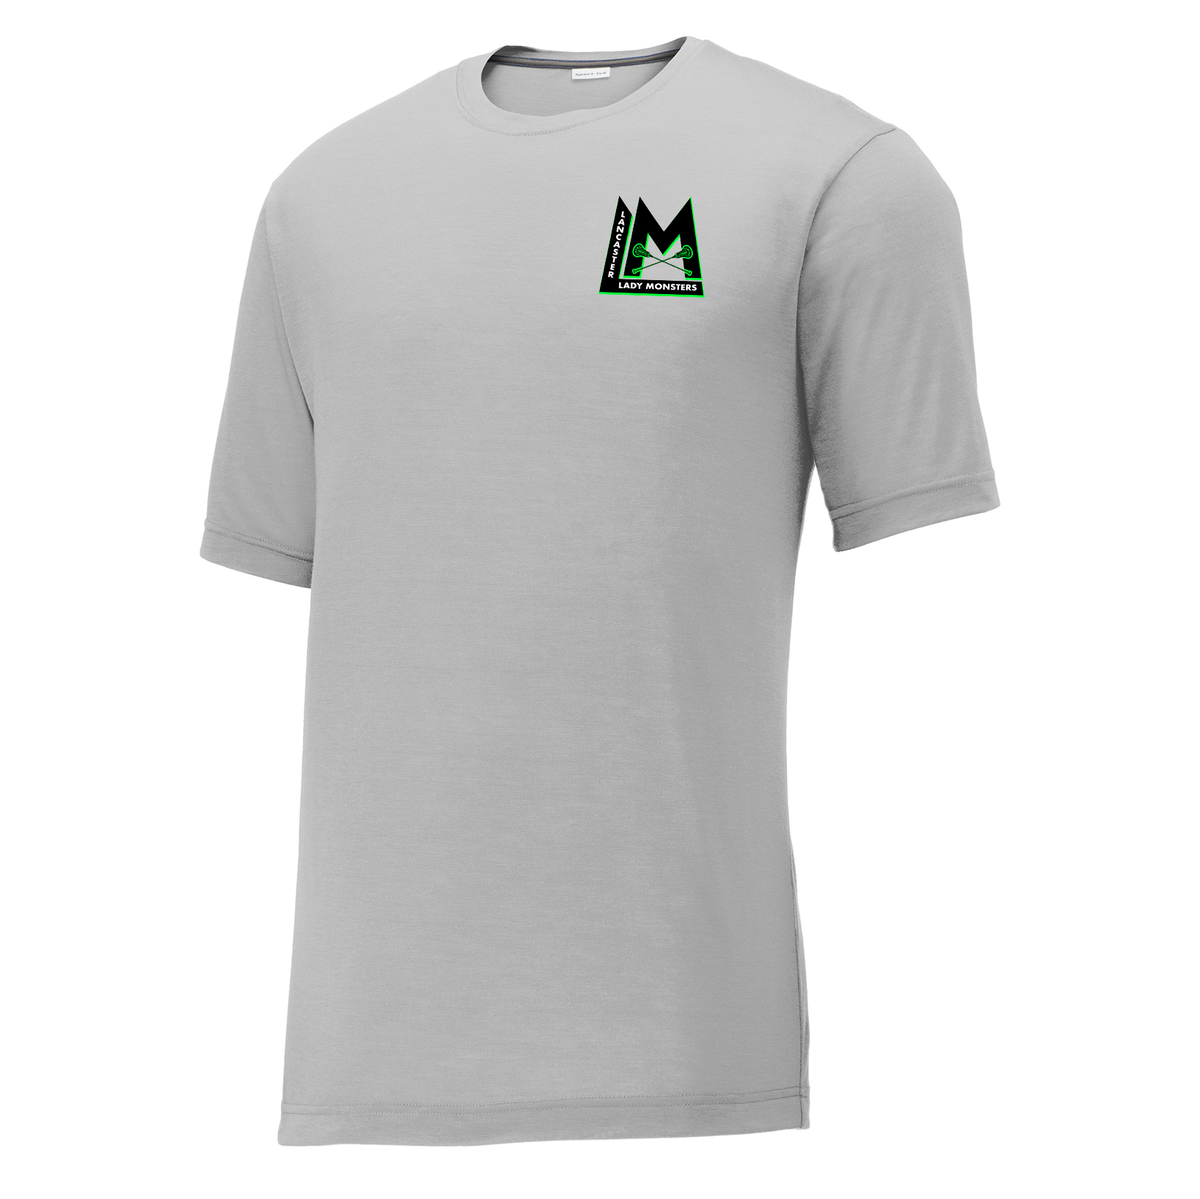 Lady Monsters Lacrosse CottonTouch Performance T-Shirt